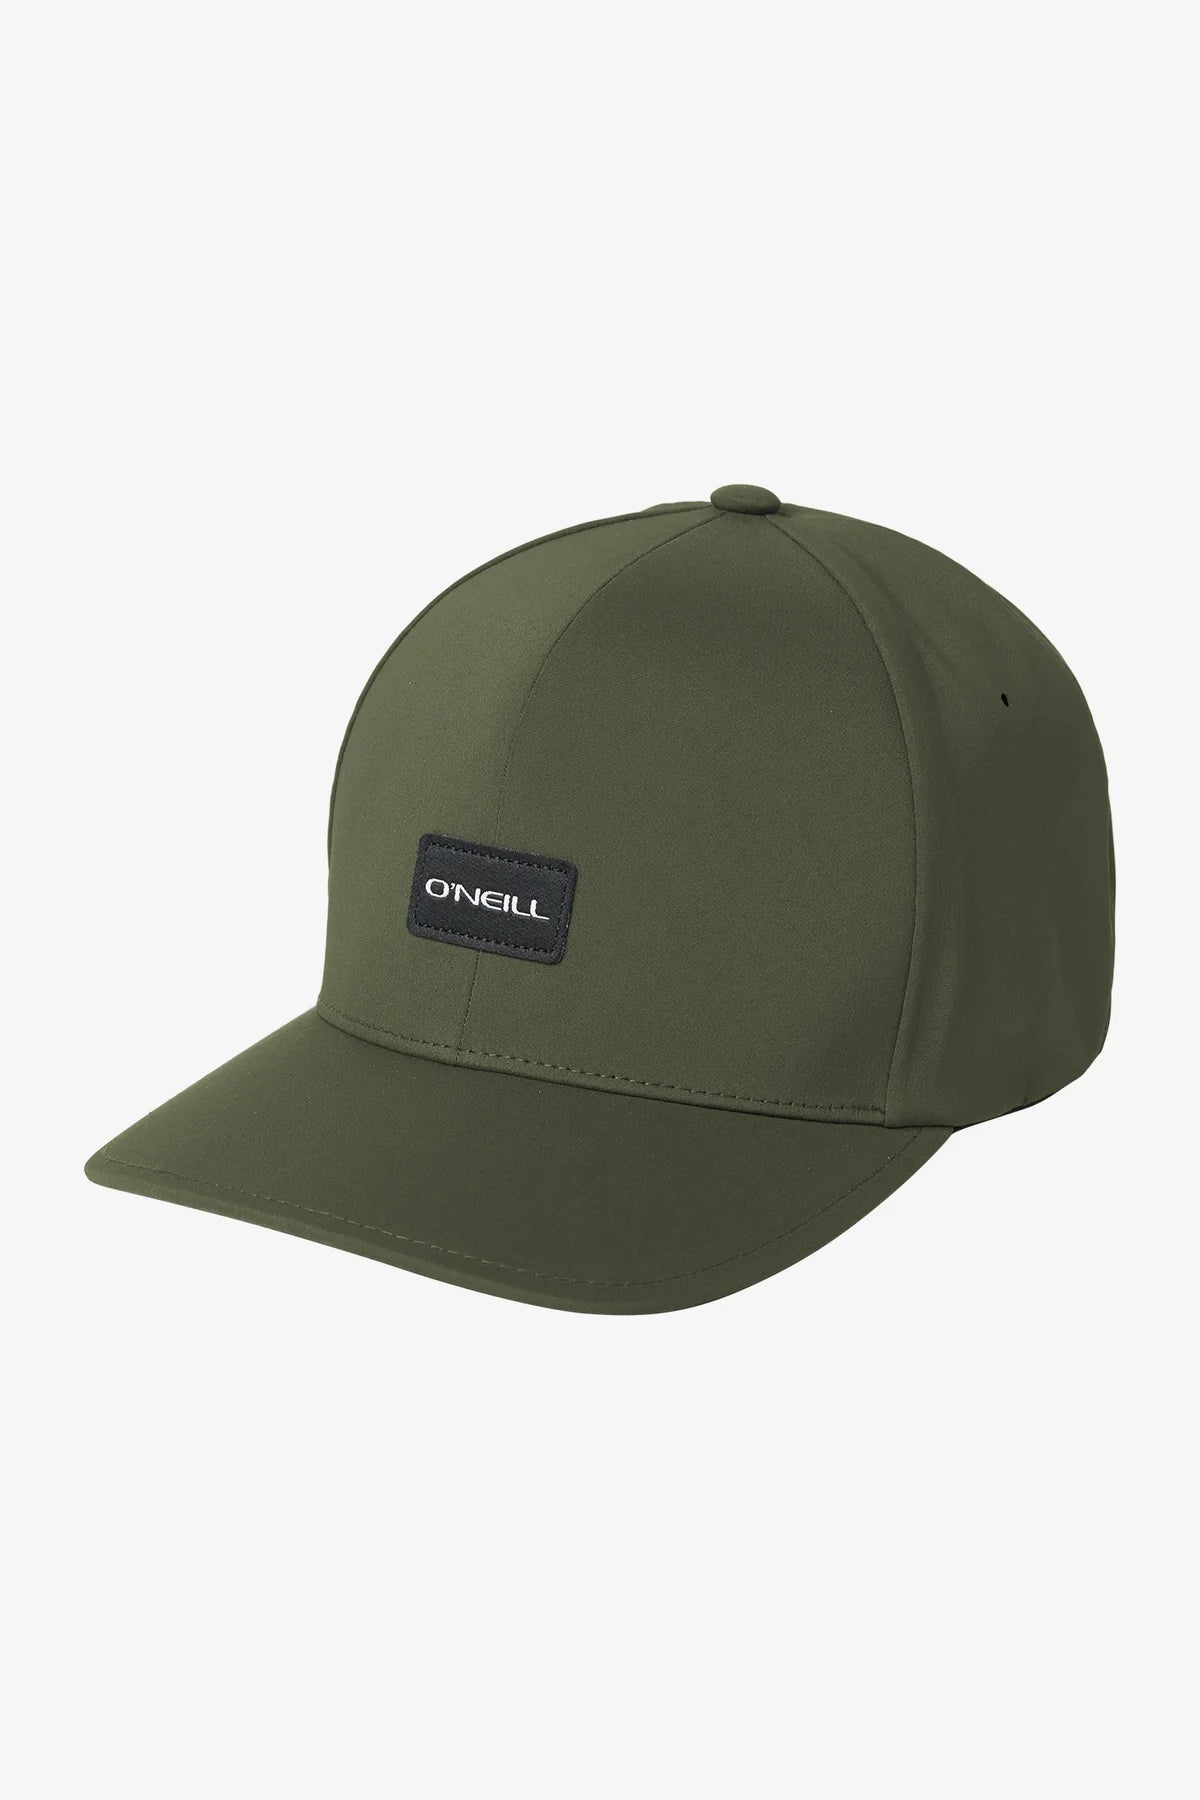 O'Neill Hybrid Stretch Hat